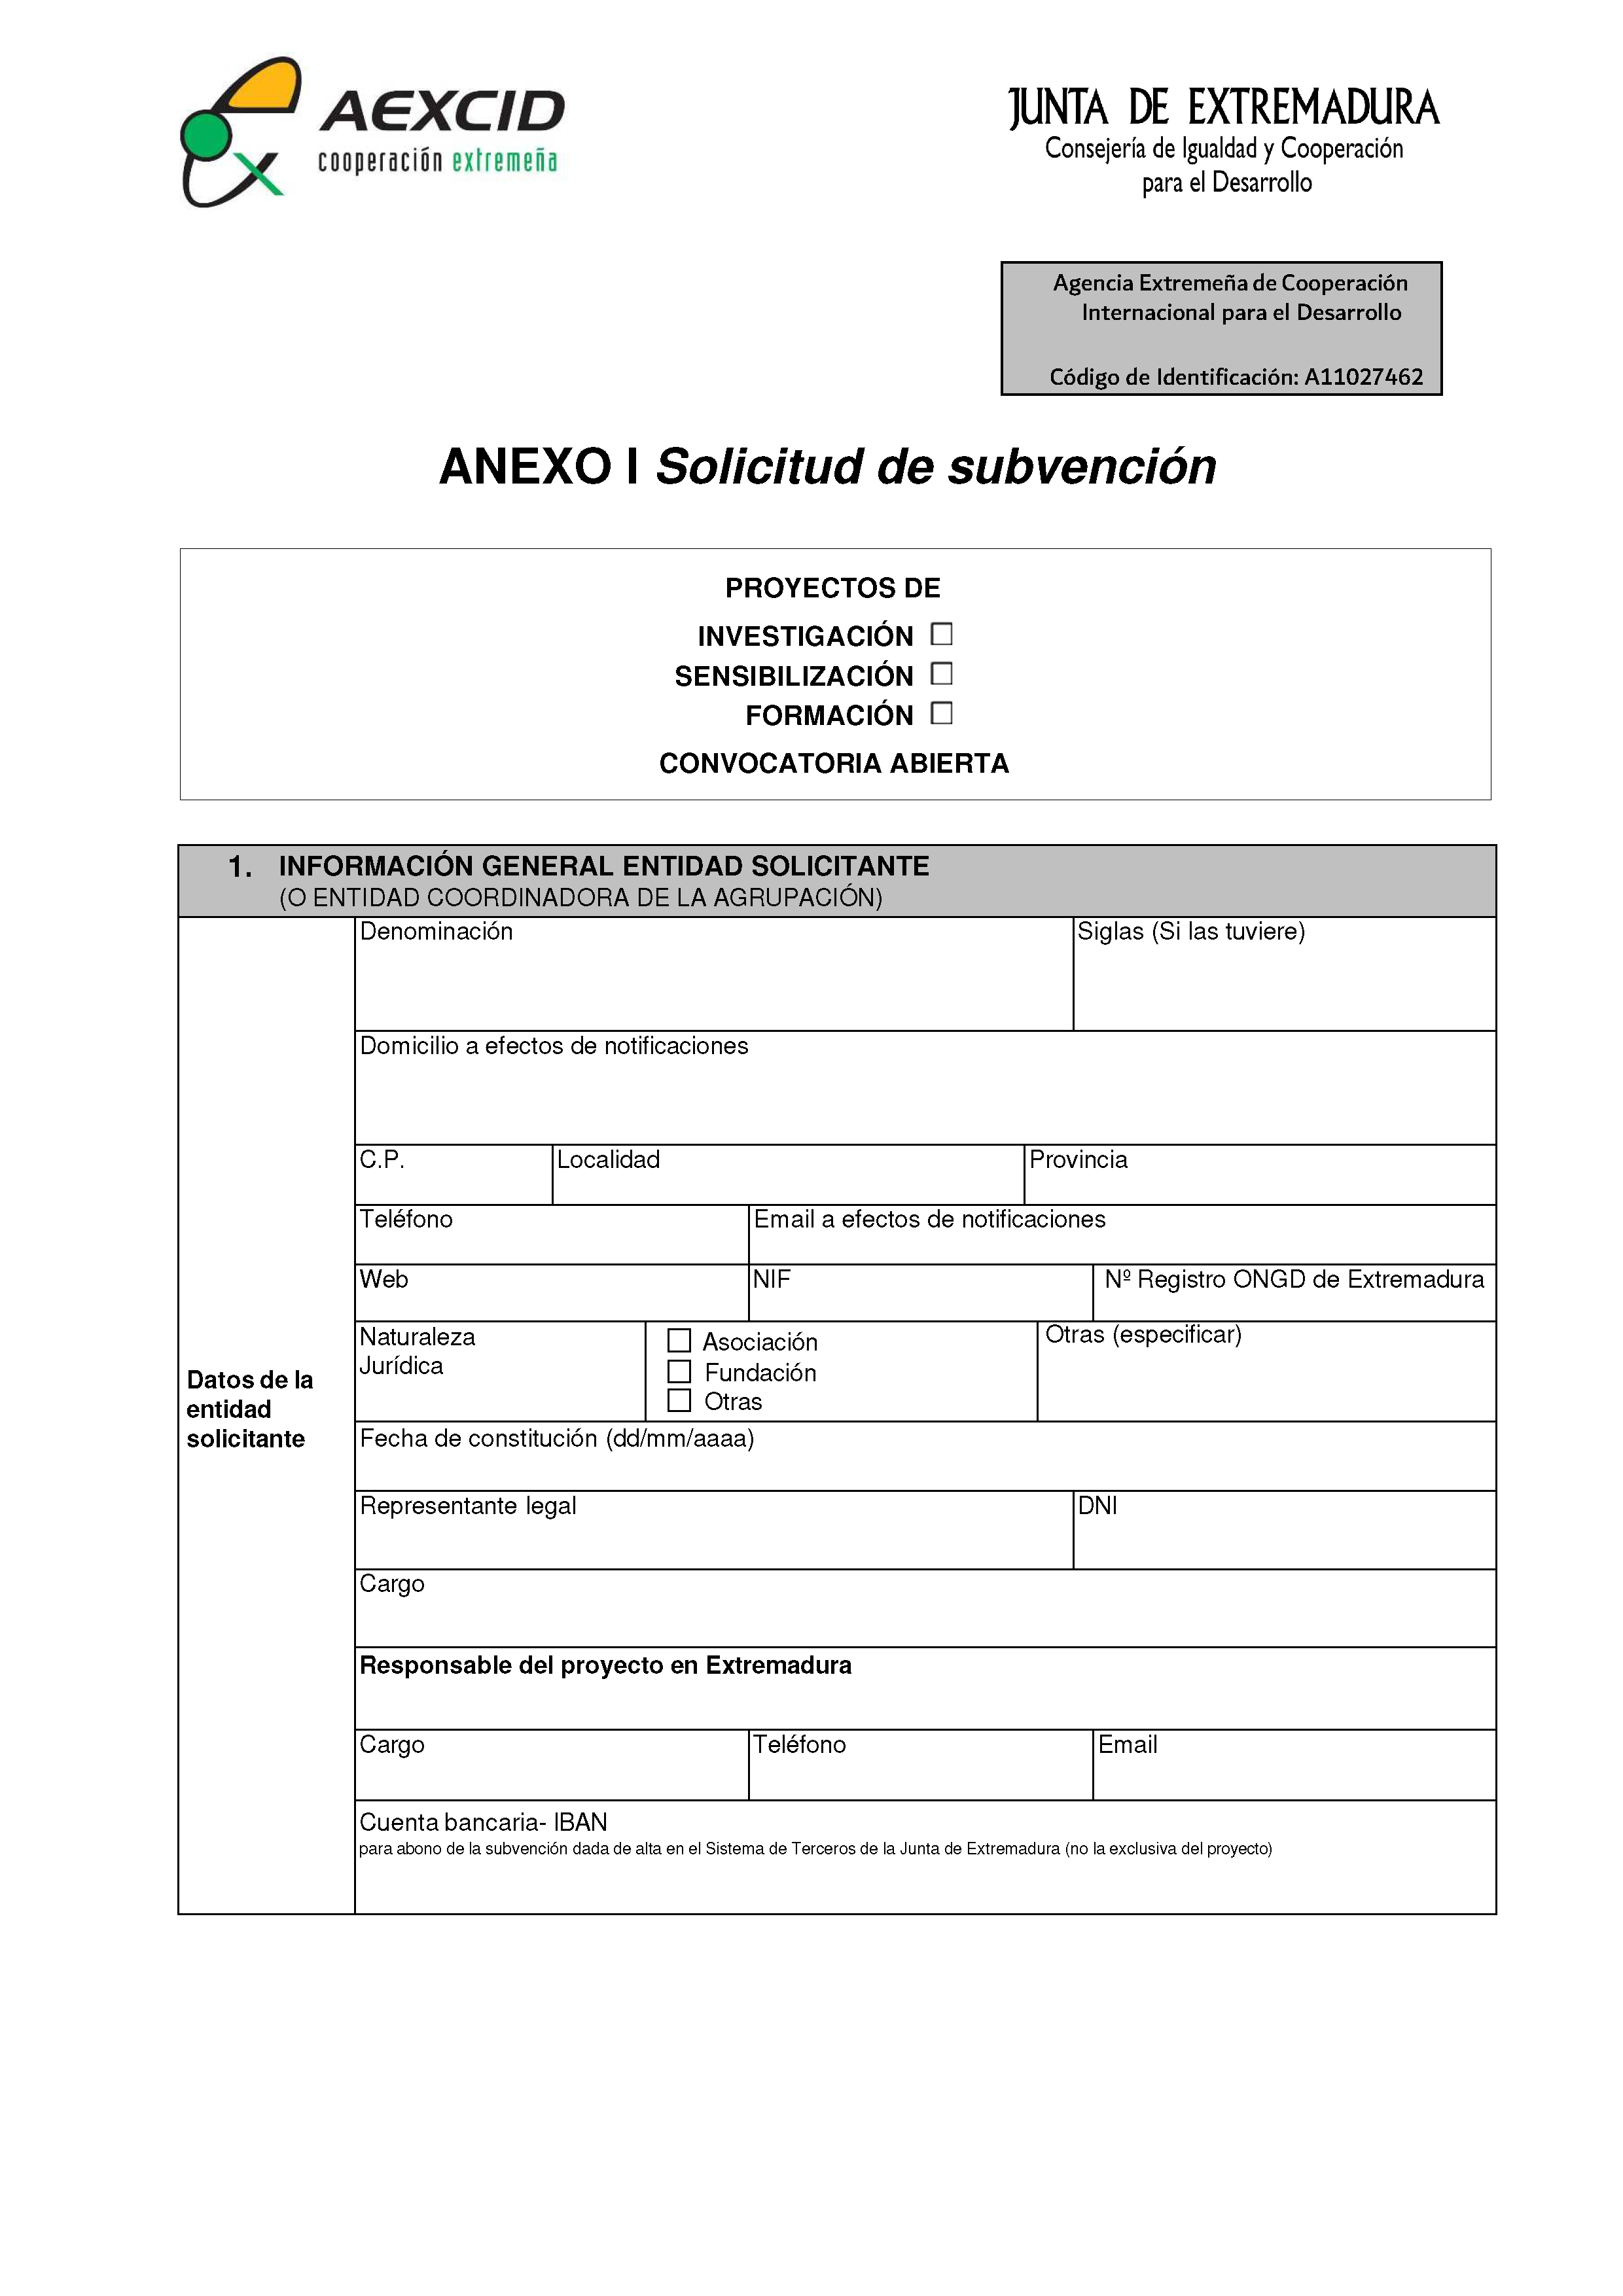 ANEXO I SOLICITUD DE SUBVENCION Pag 24